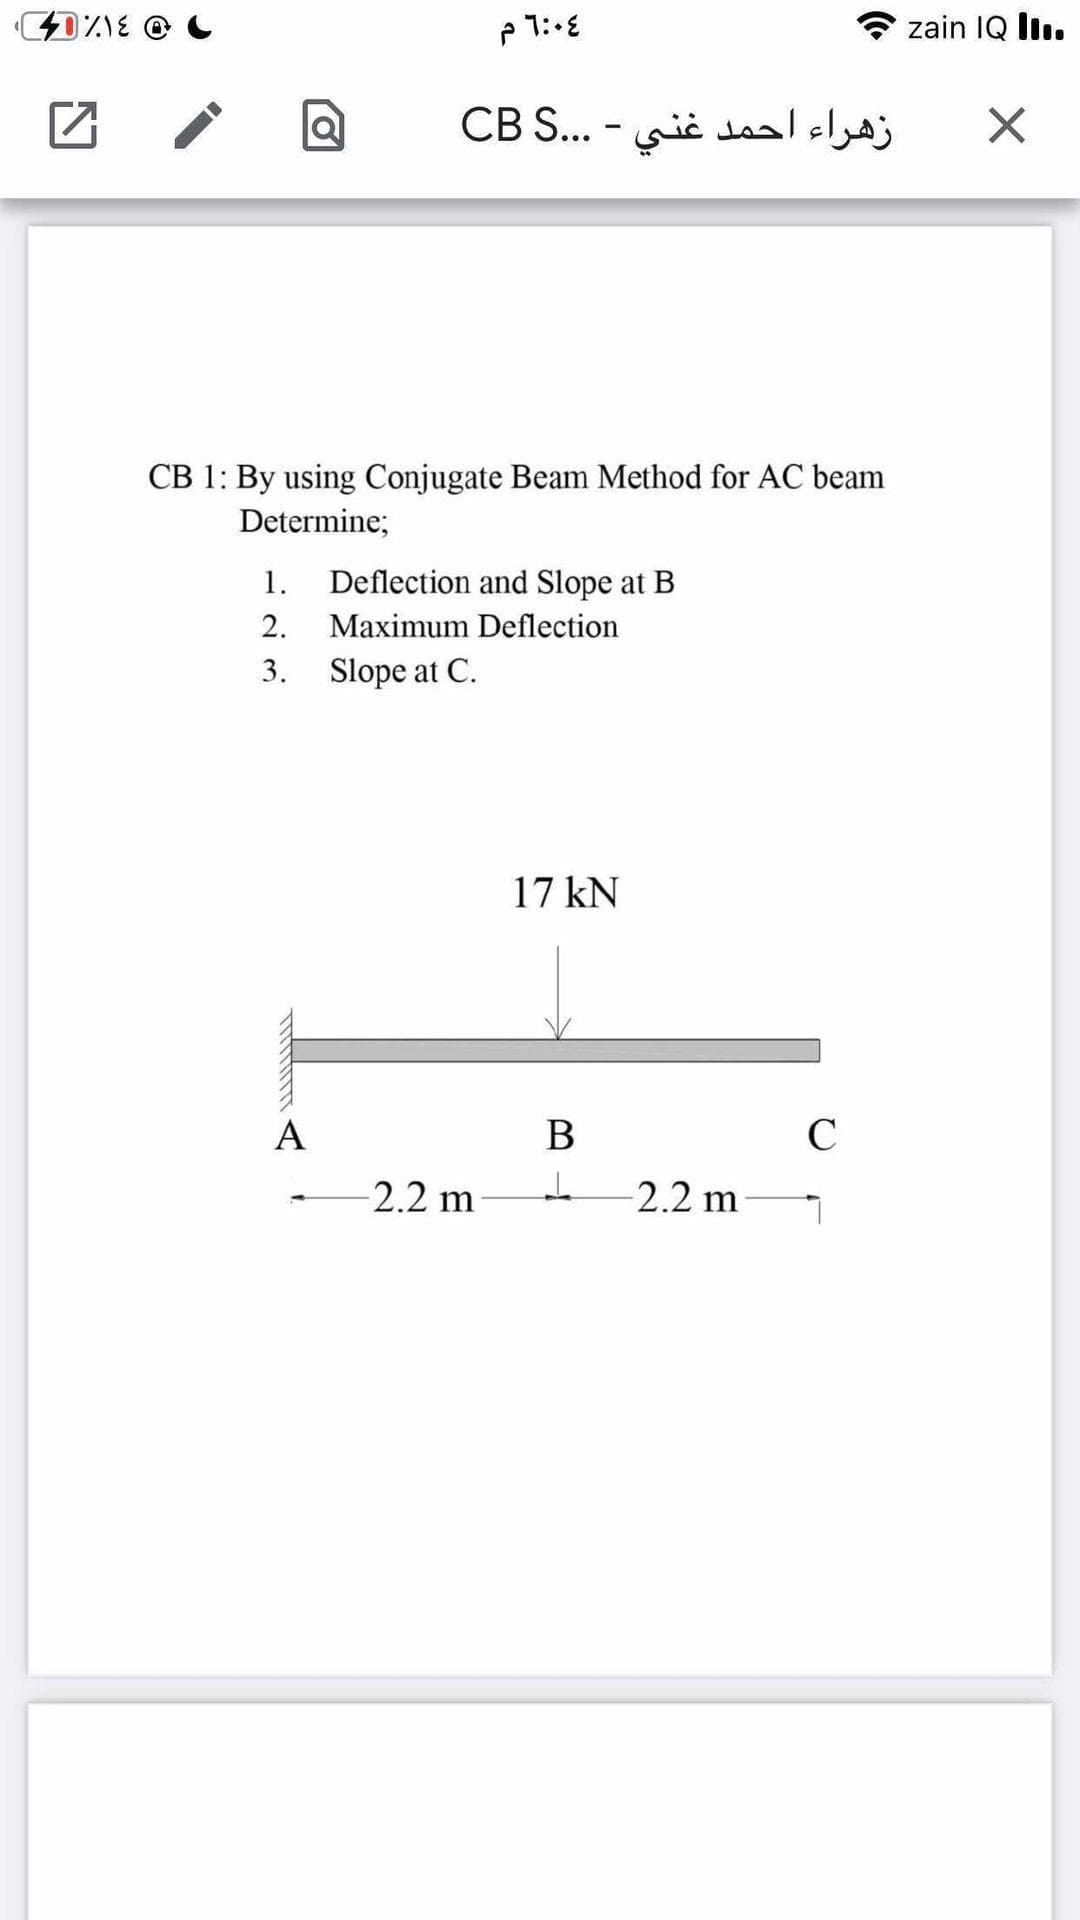 zain IQ li.
زهراء احمد غني - . .SCB
CB 1: By using Conjugate Beam Method for AC beam
Determine;
1.
Deflection and Slope at B
2.
Maximum Deflection
3.
Slope at C.
17 kN
A
2.2 m
-2.2 m
